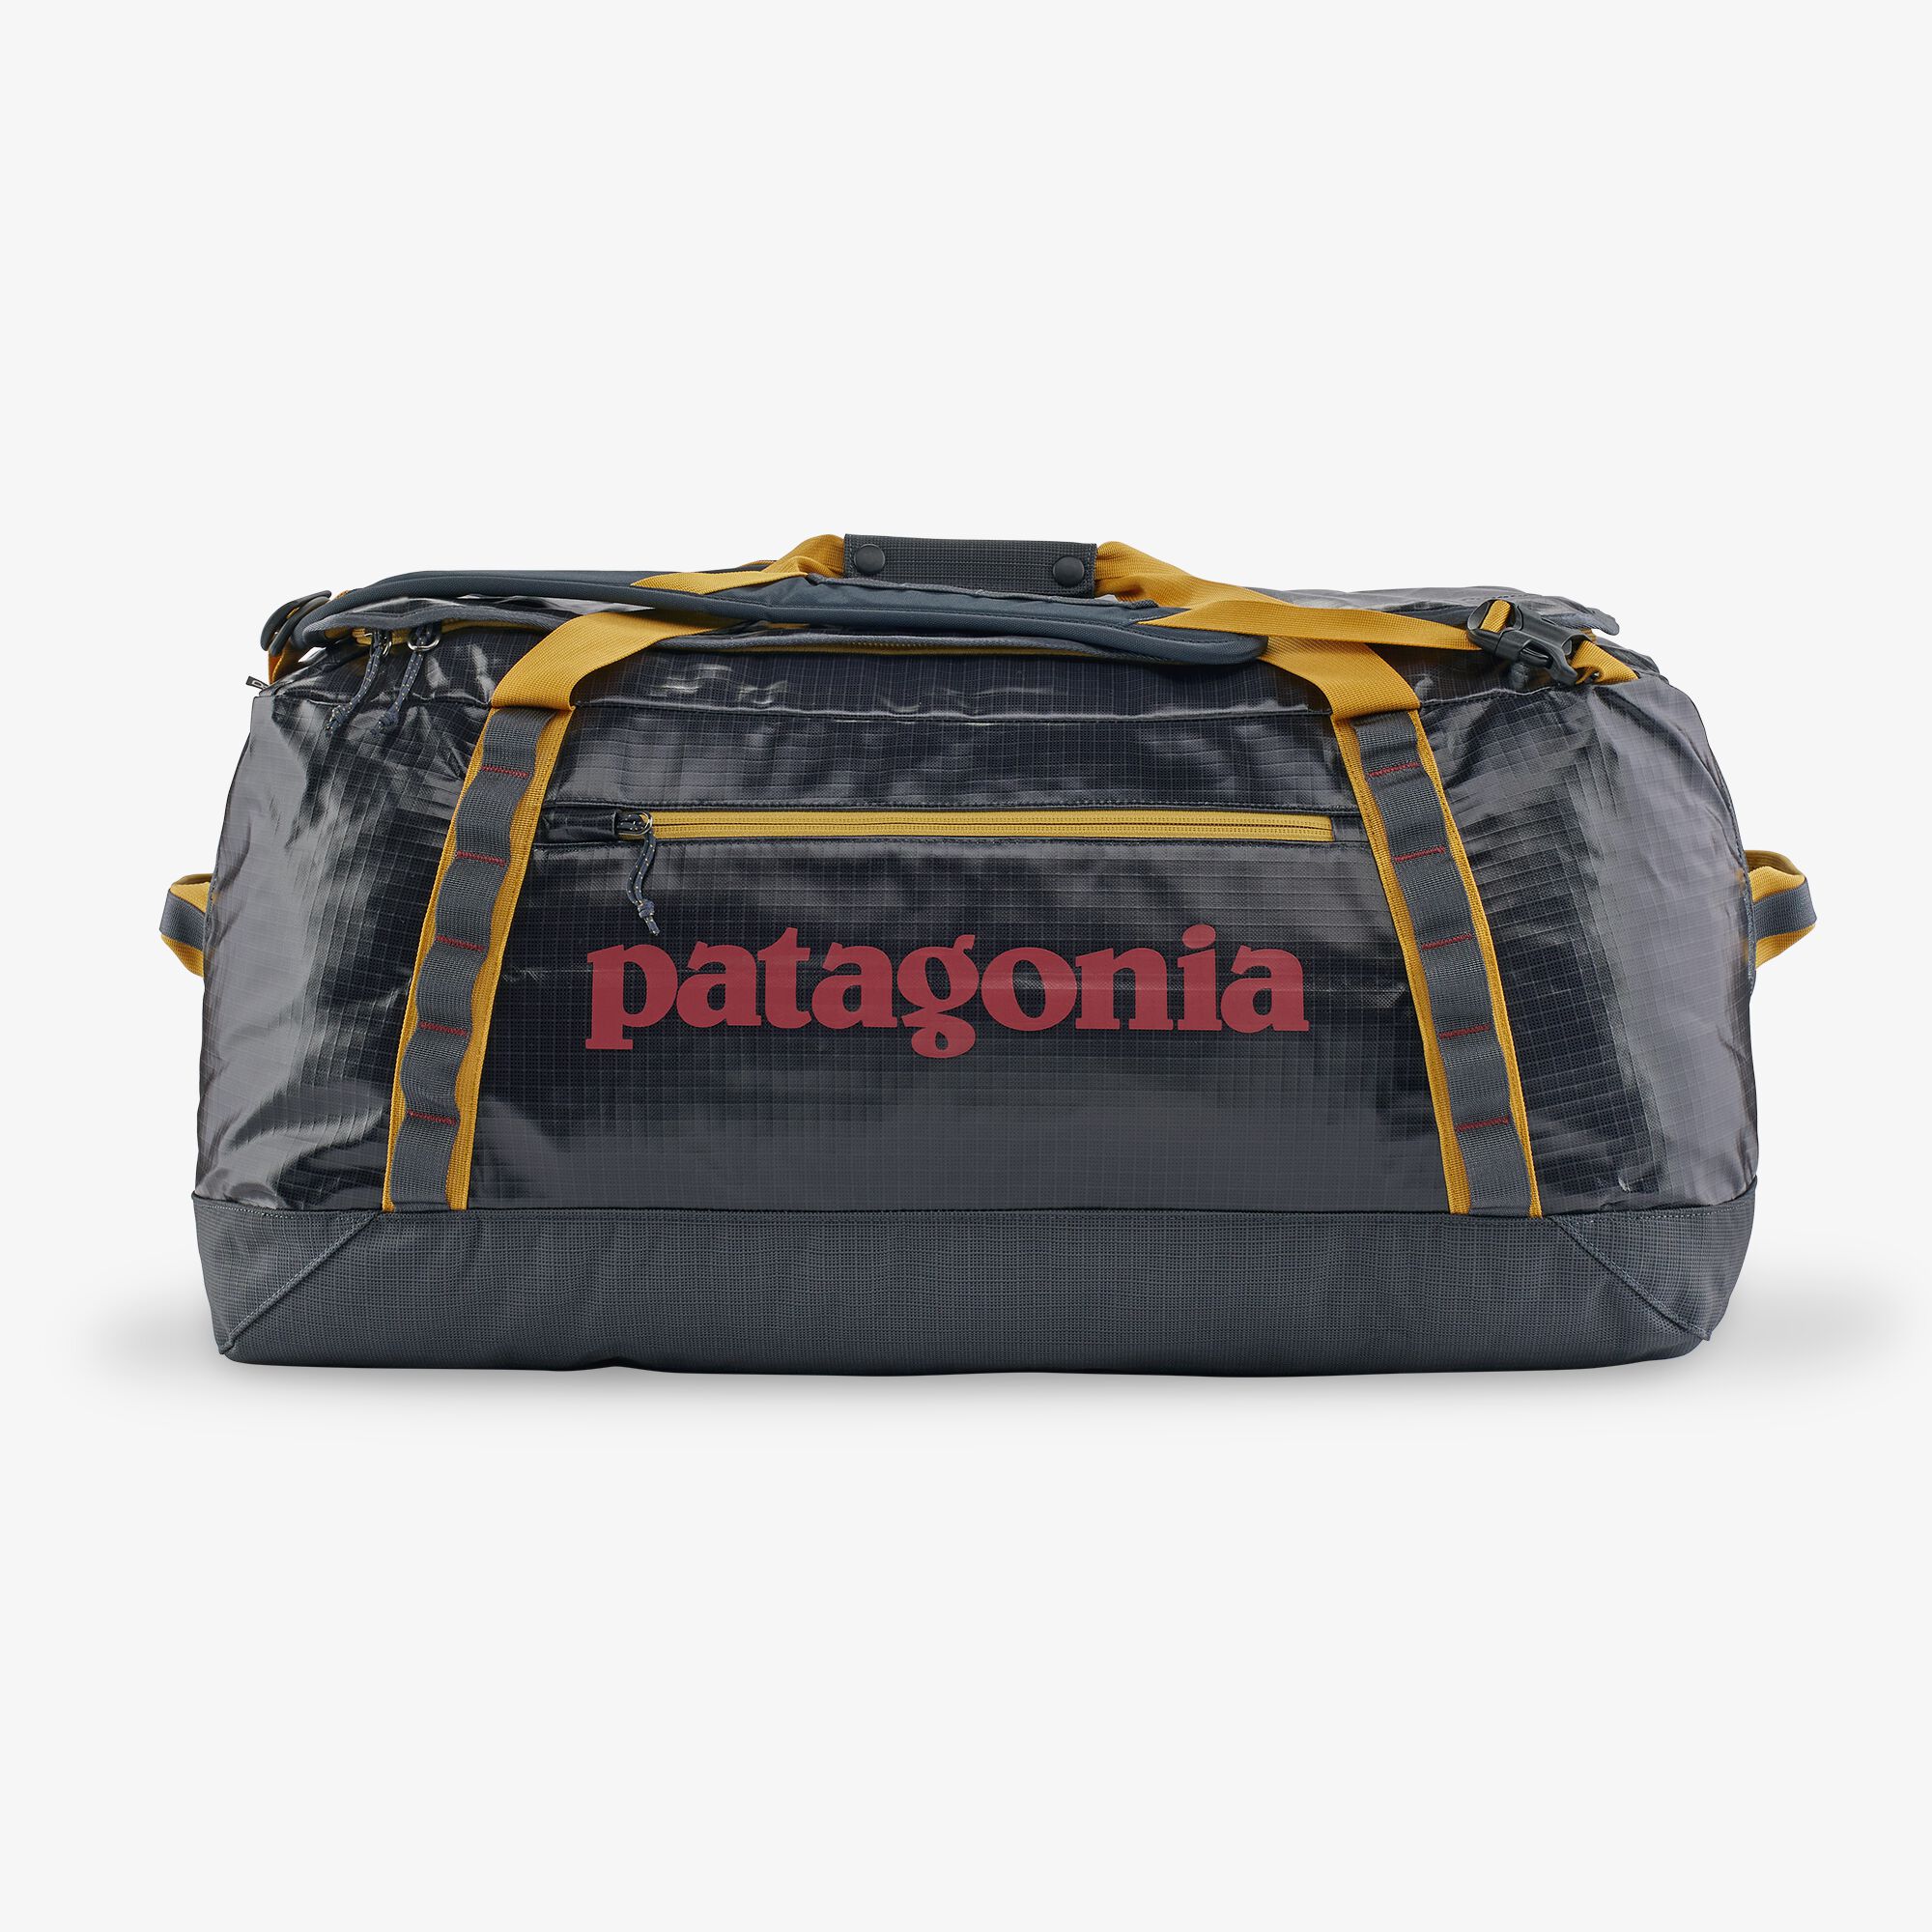 Patagonia Black Hole Duffel Bag 70L Smolder Blue With Buckwheat Gold